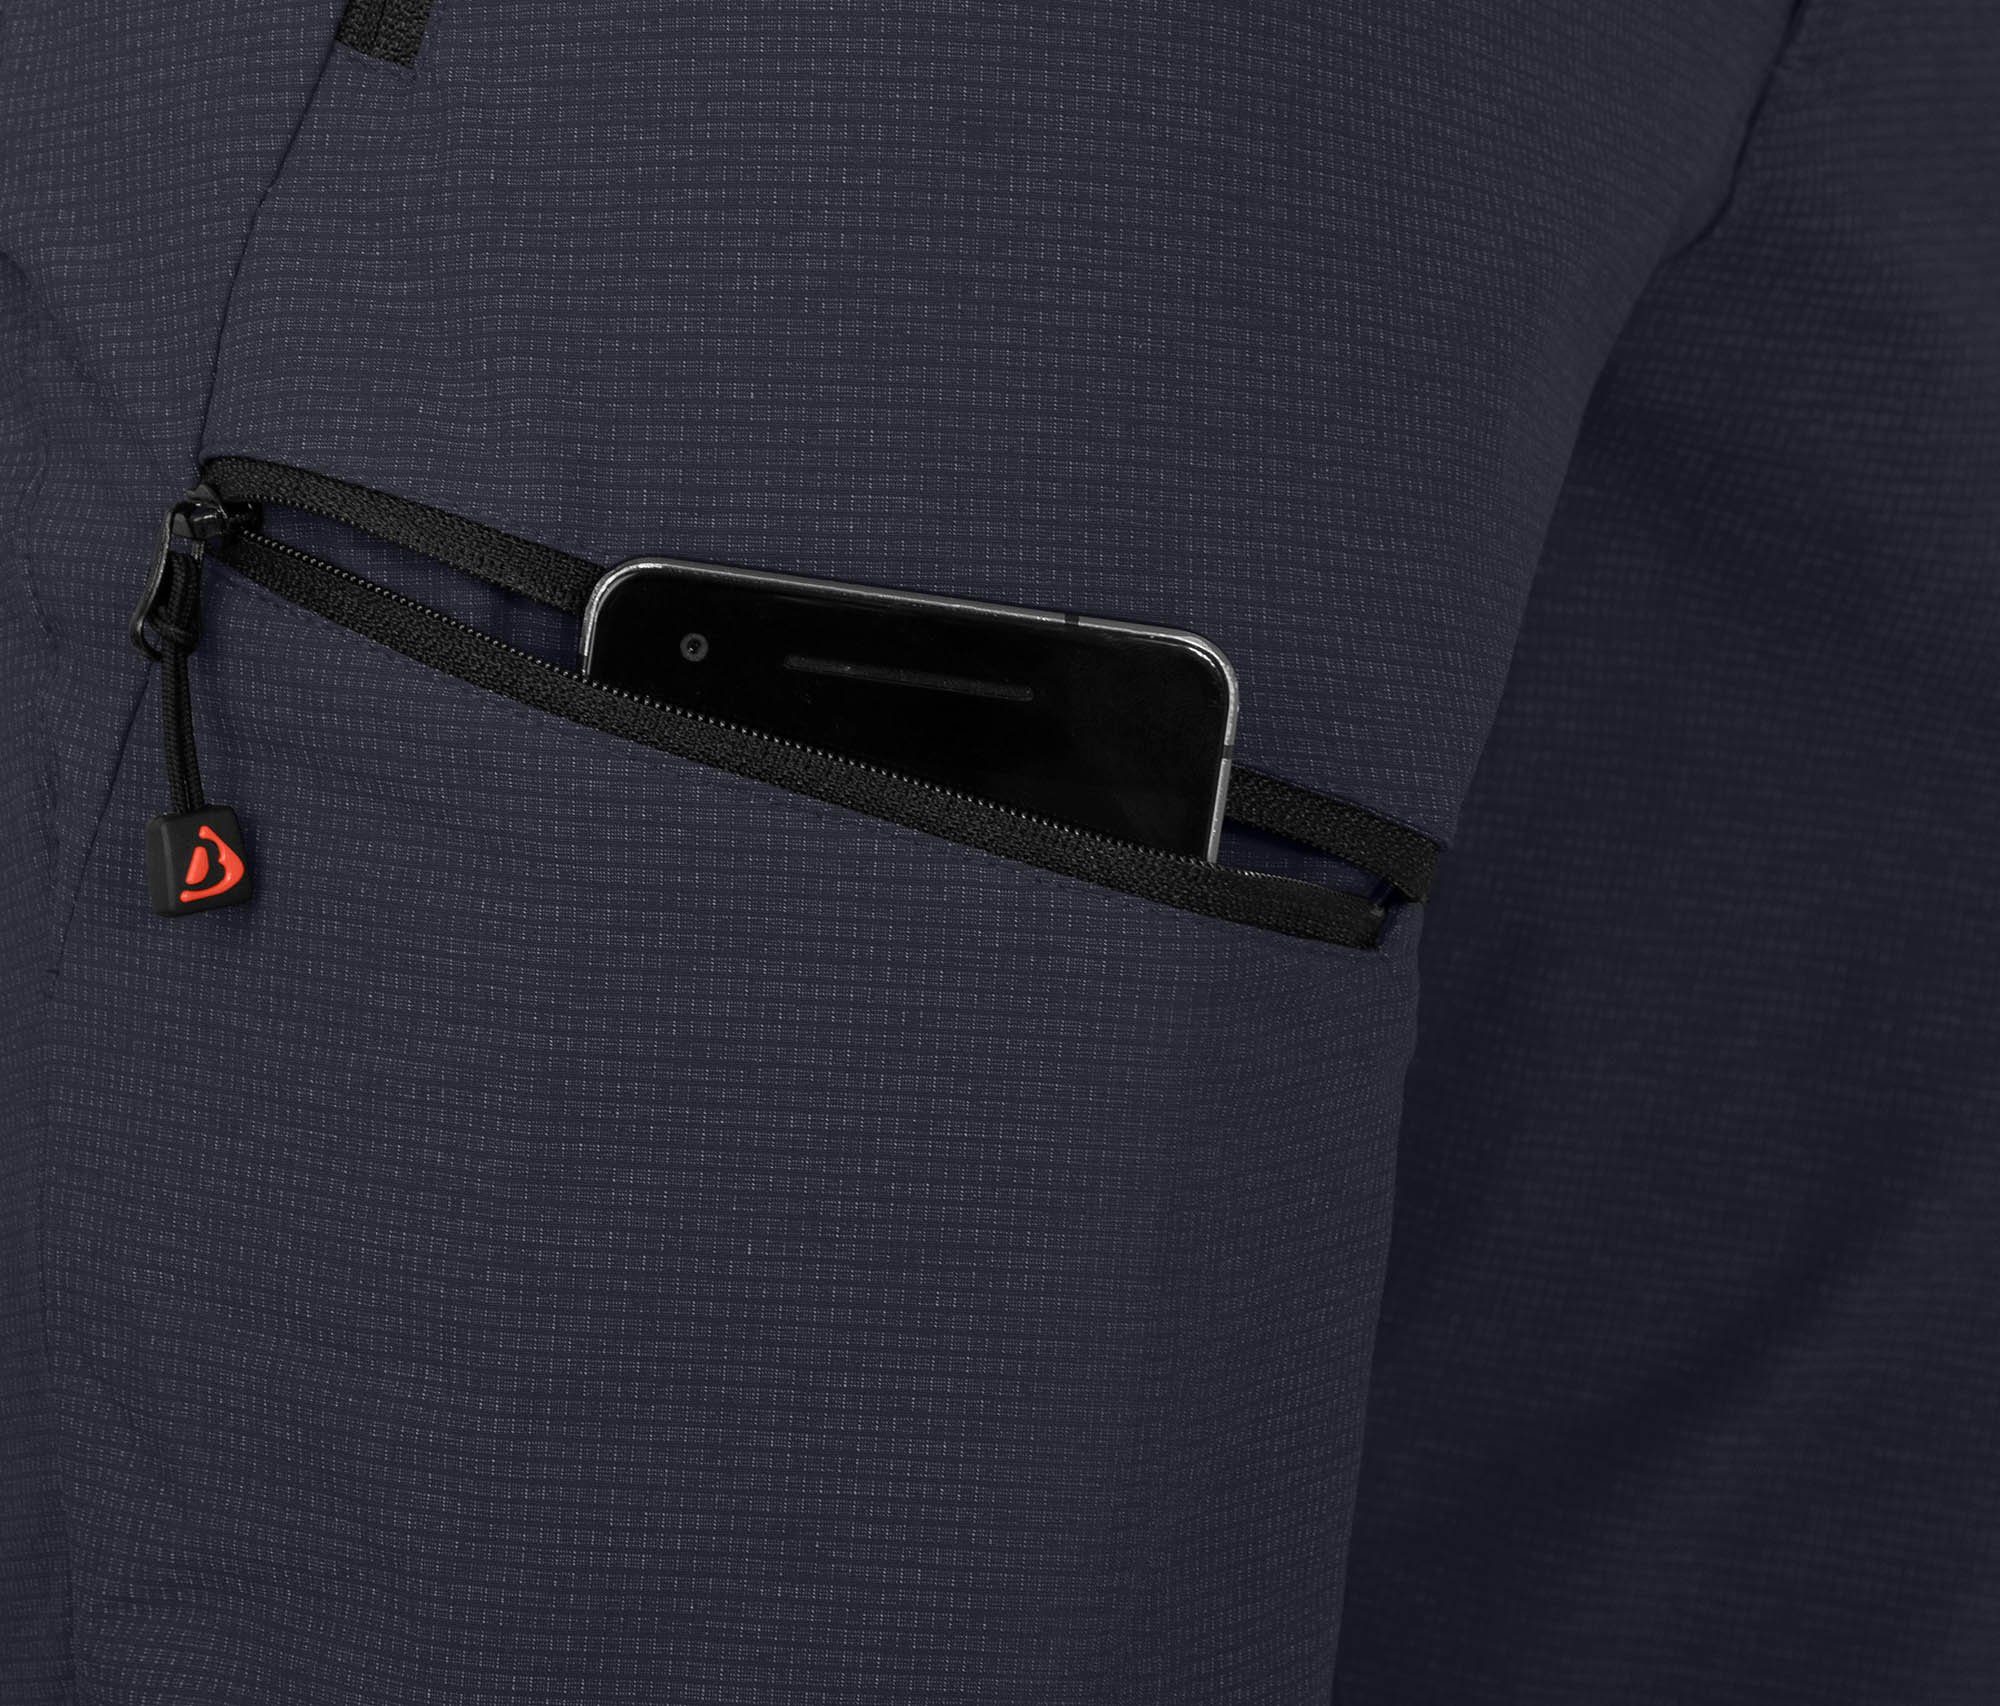 Zip-off-Hose Herren LEBIKO blau robust, Kurzgrößen, Nacht Wanderhose, elastisch, Bergson Zipp-Off